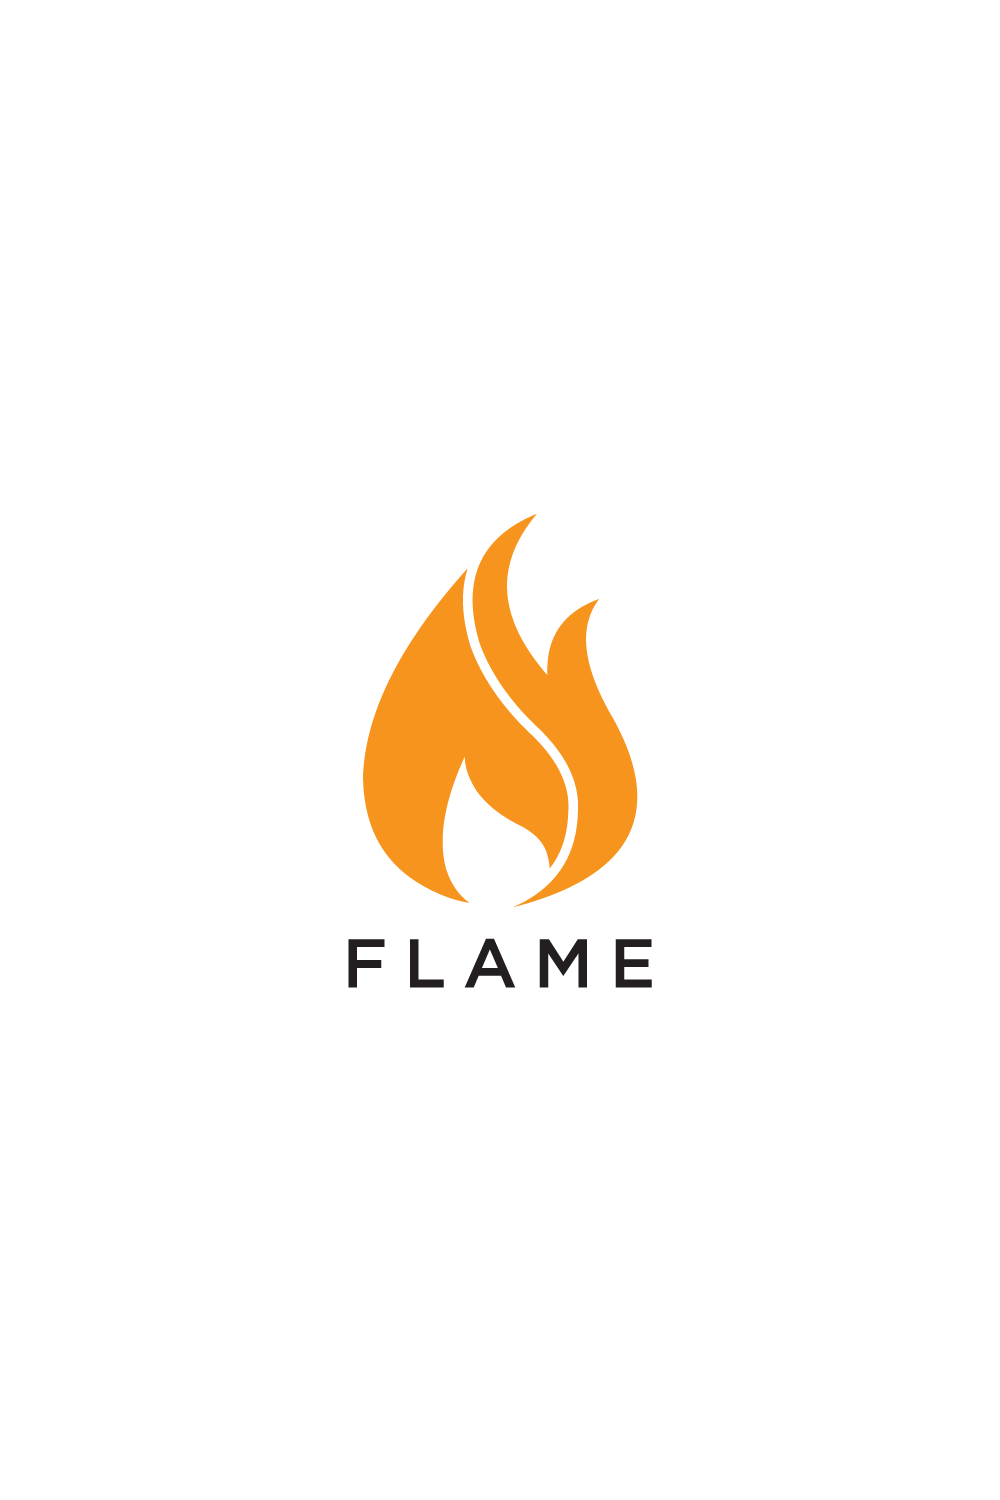 Fire Flame Logo design vector Bonfire Silhouette Logotype icon pinterest preview image.